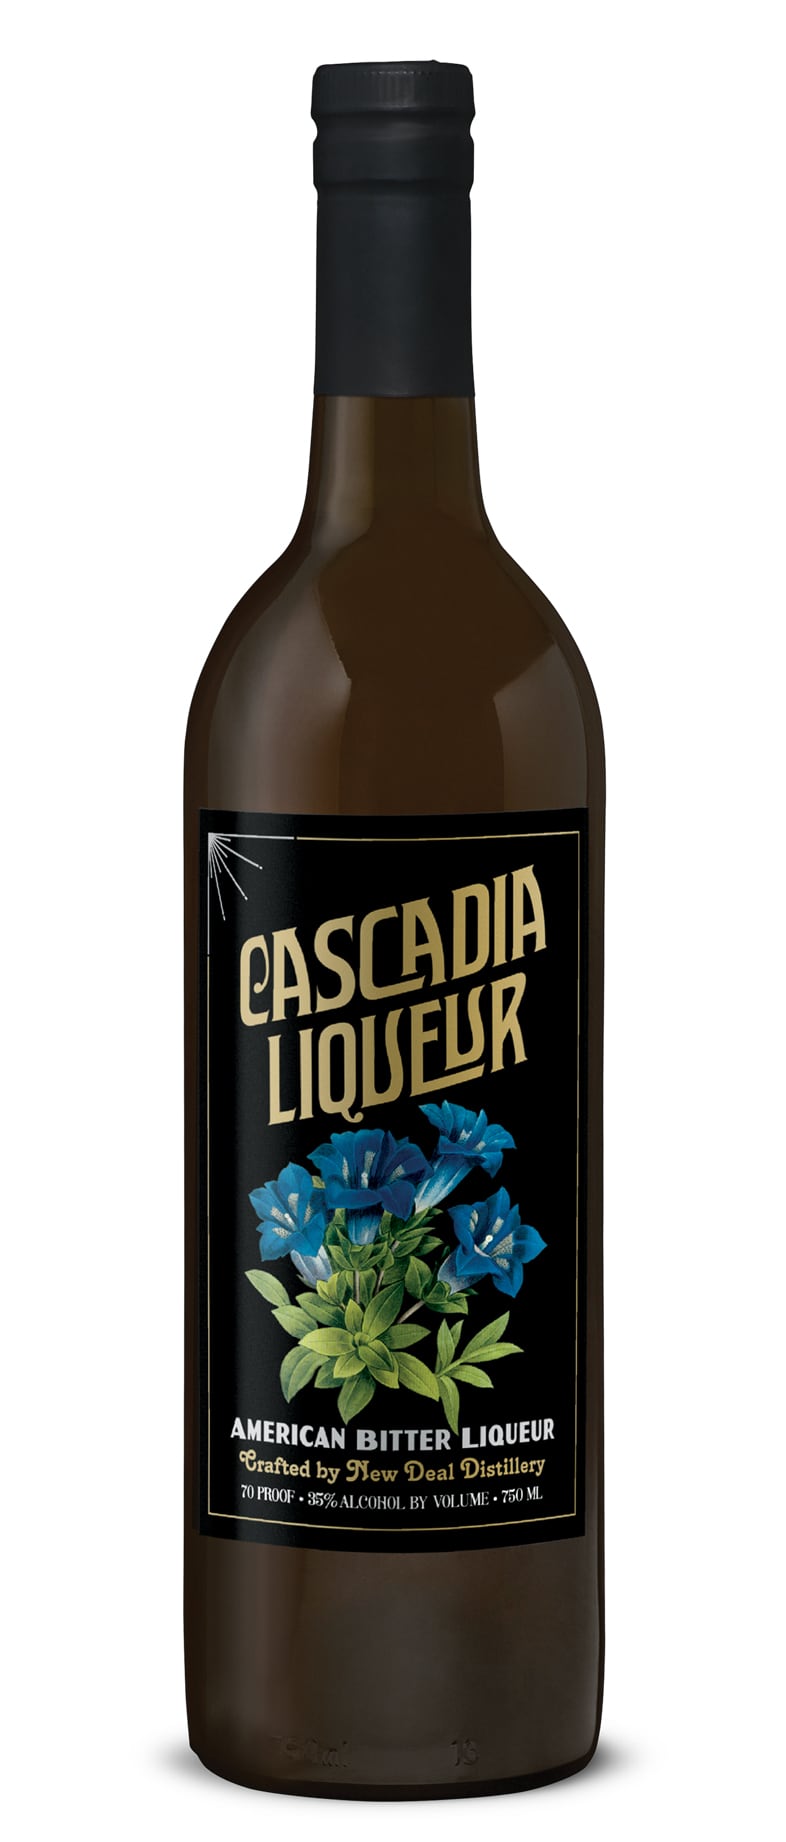 New Deal Distillery - Cascadia American Bitter Liqueur